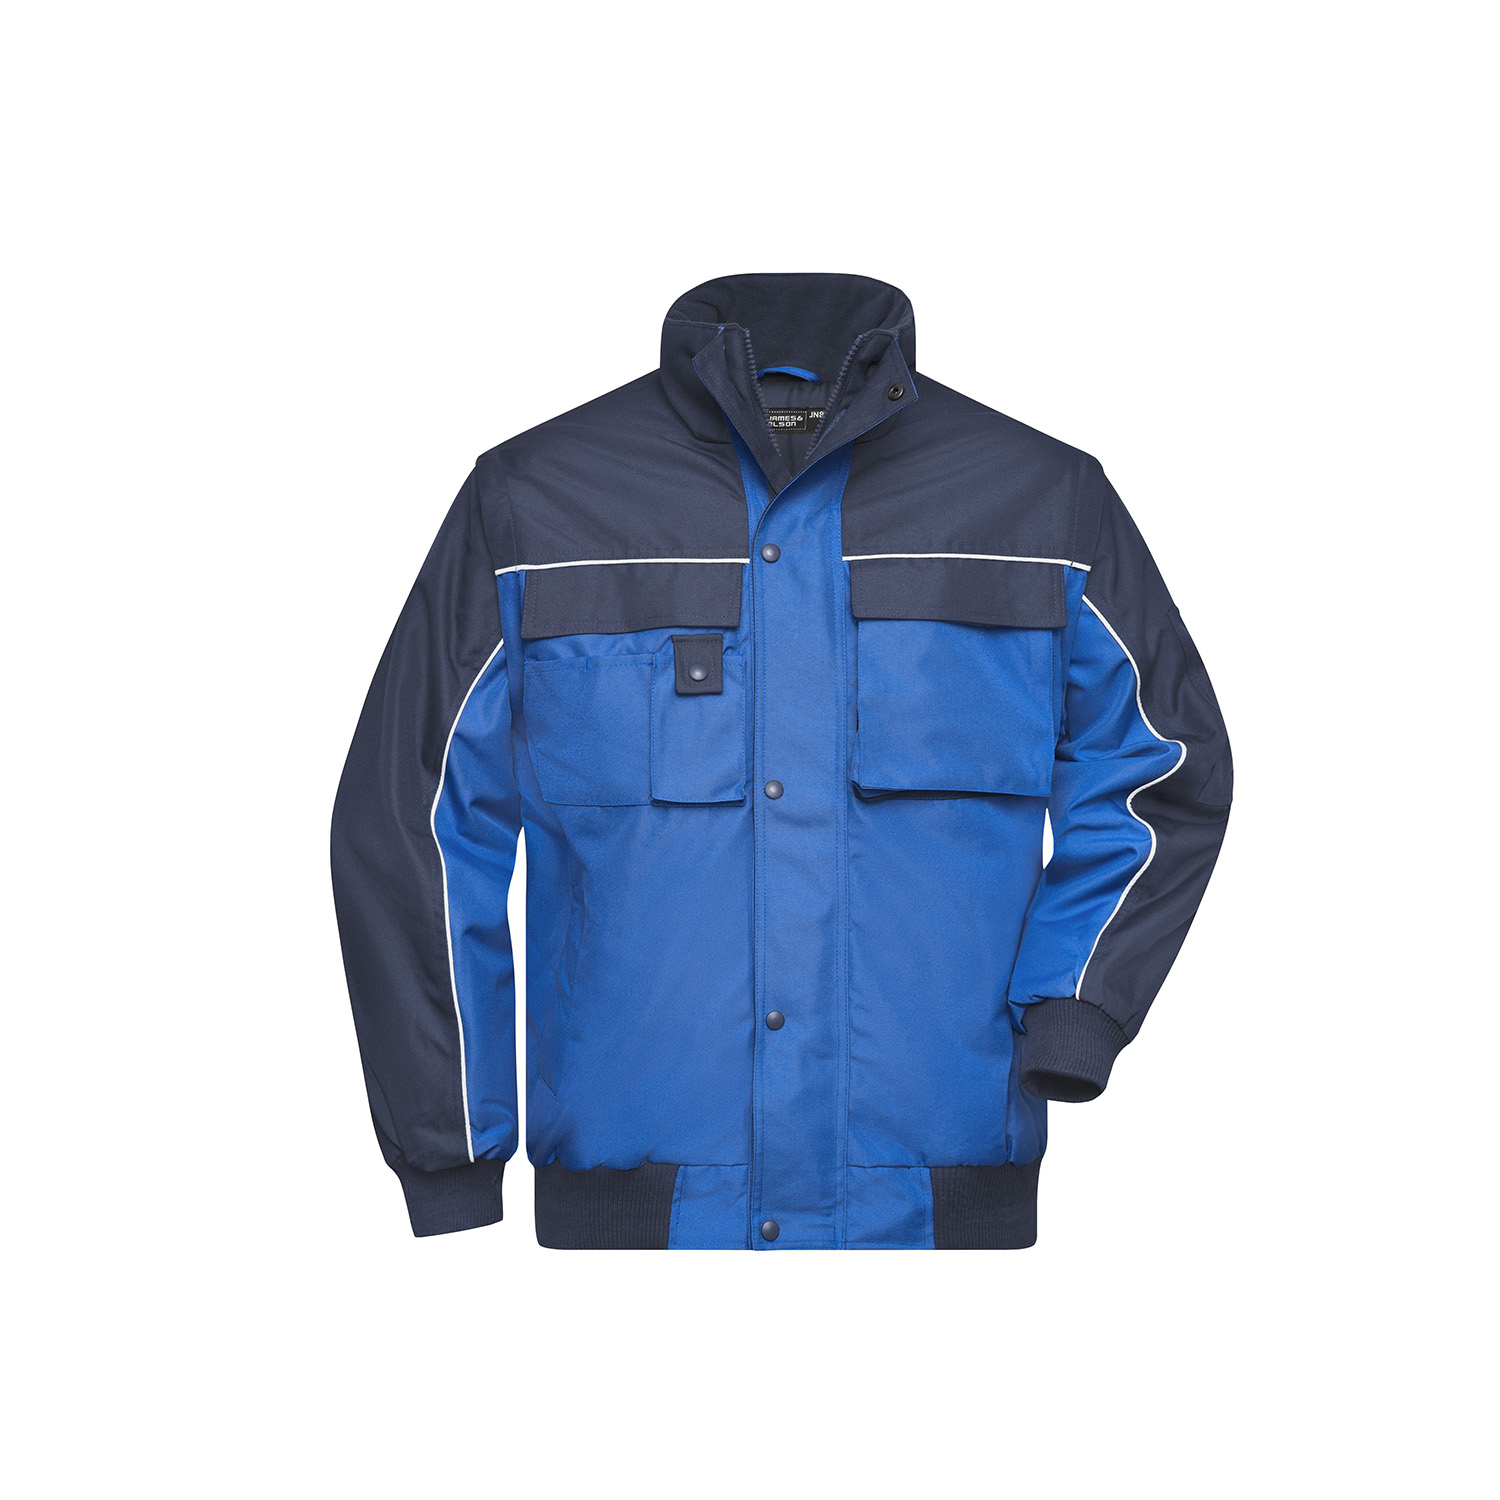 Workwear-Jacke, royalblau/marine